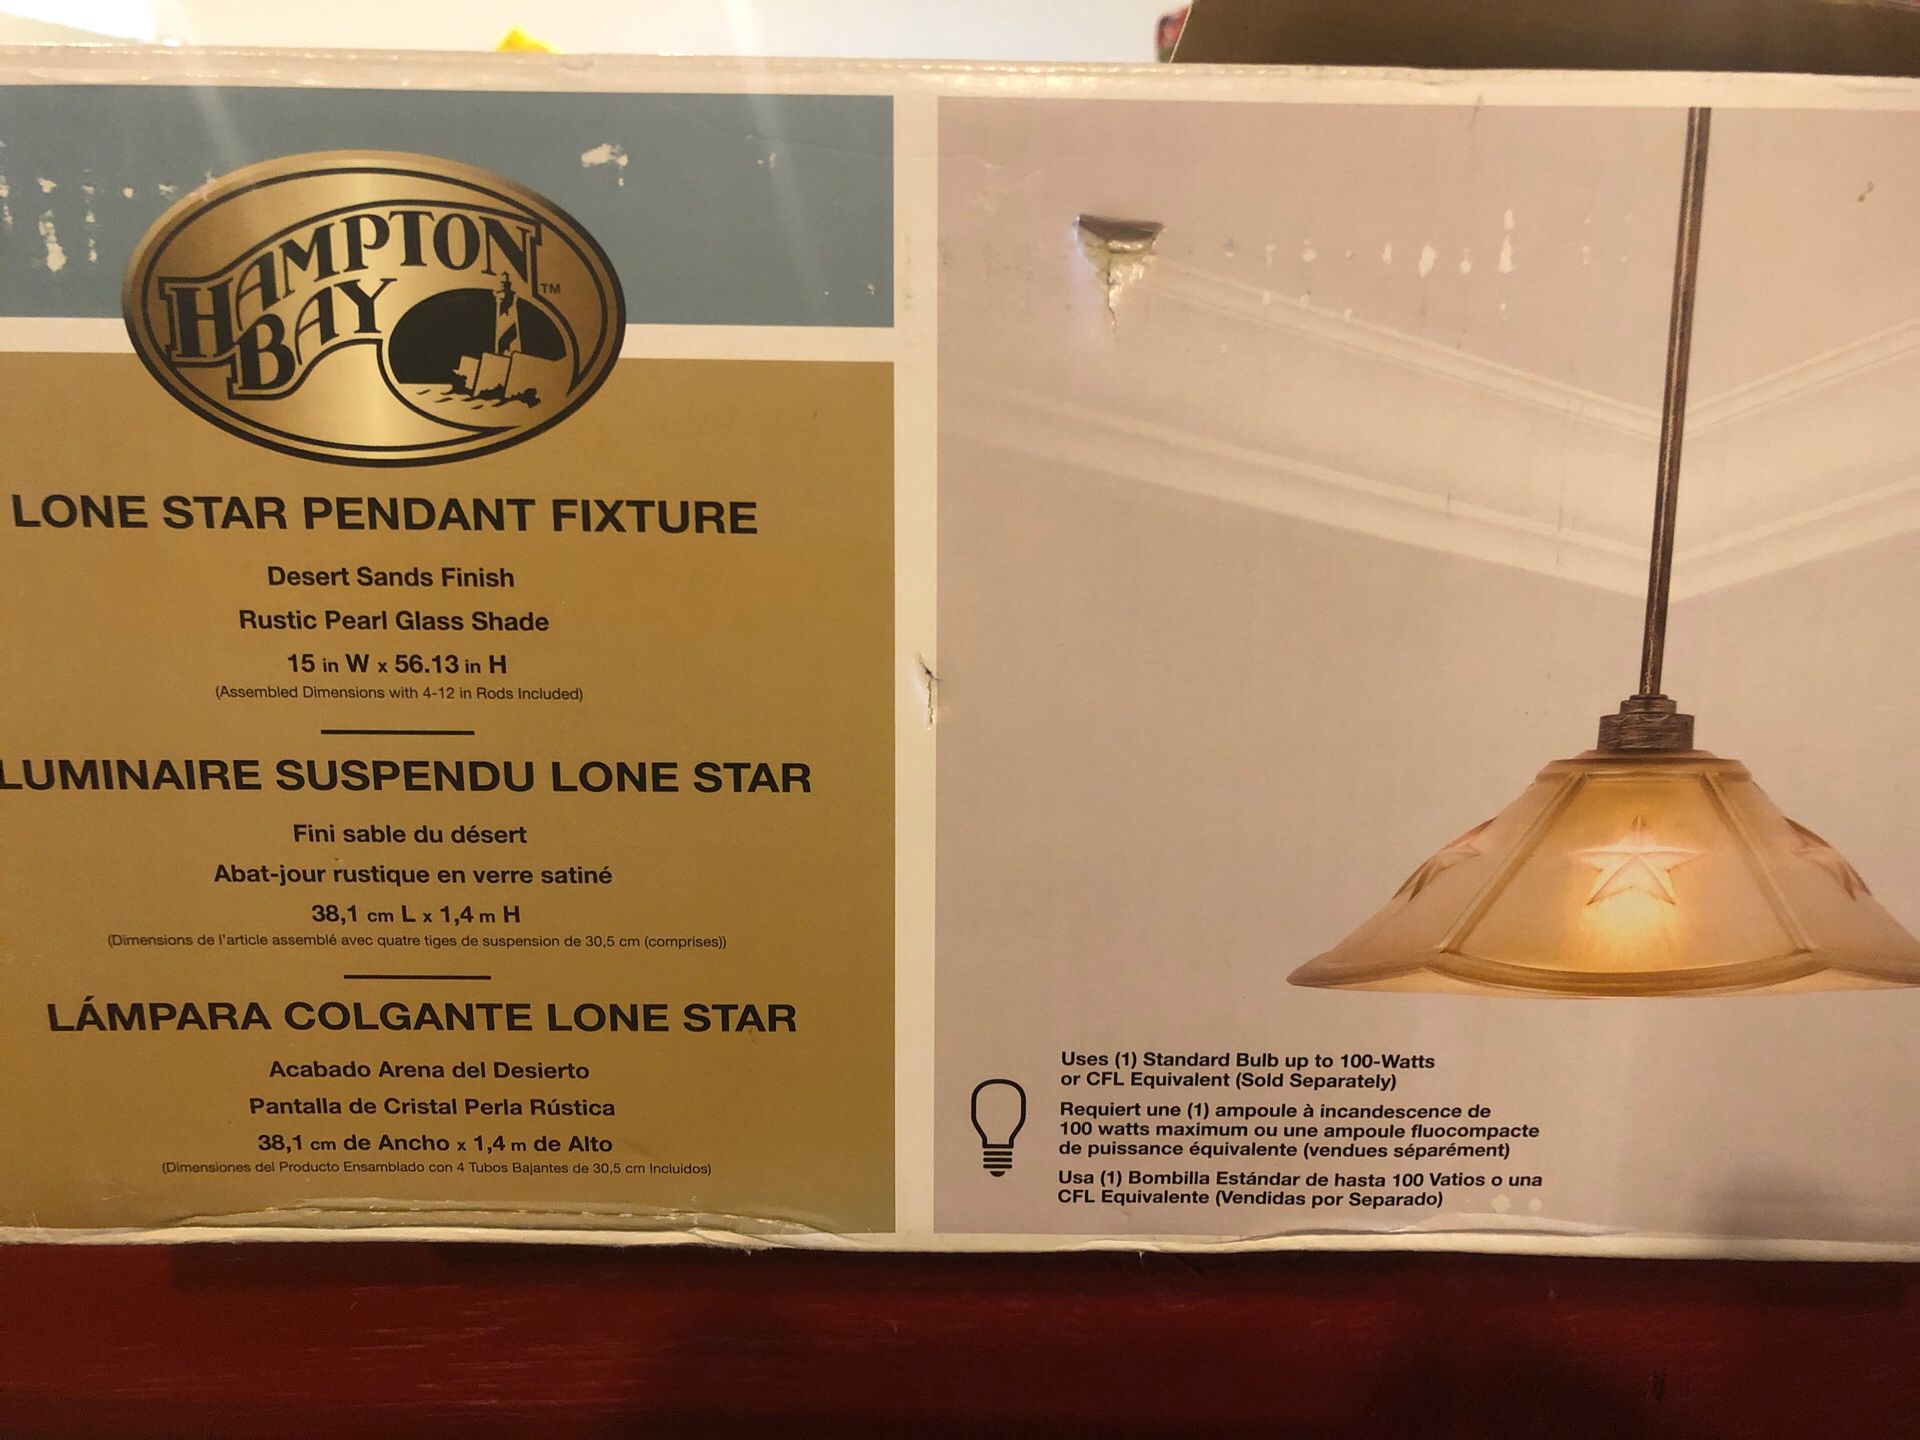 Pendant fixture light by Hampton Bay Lonestar